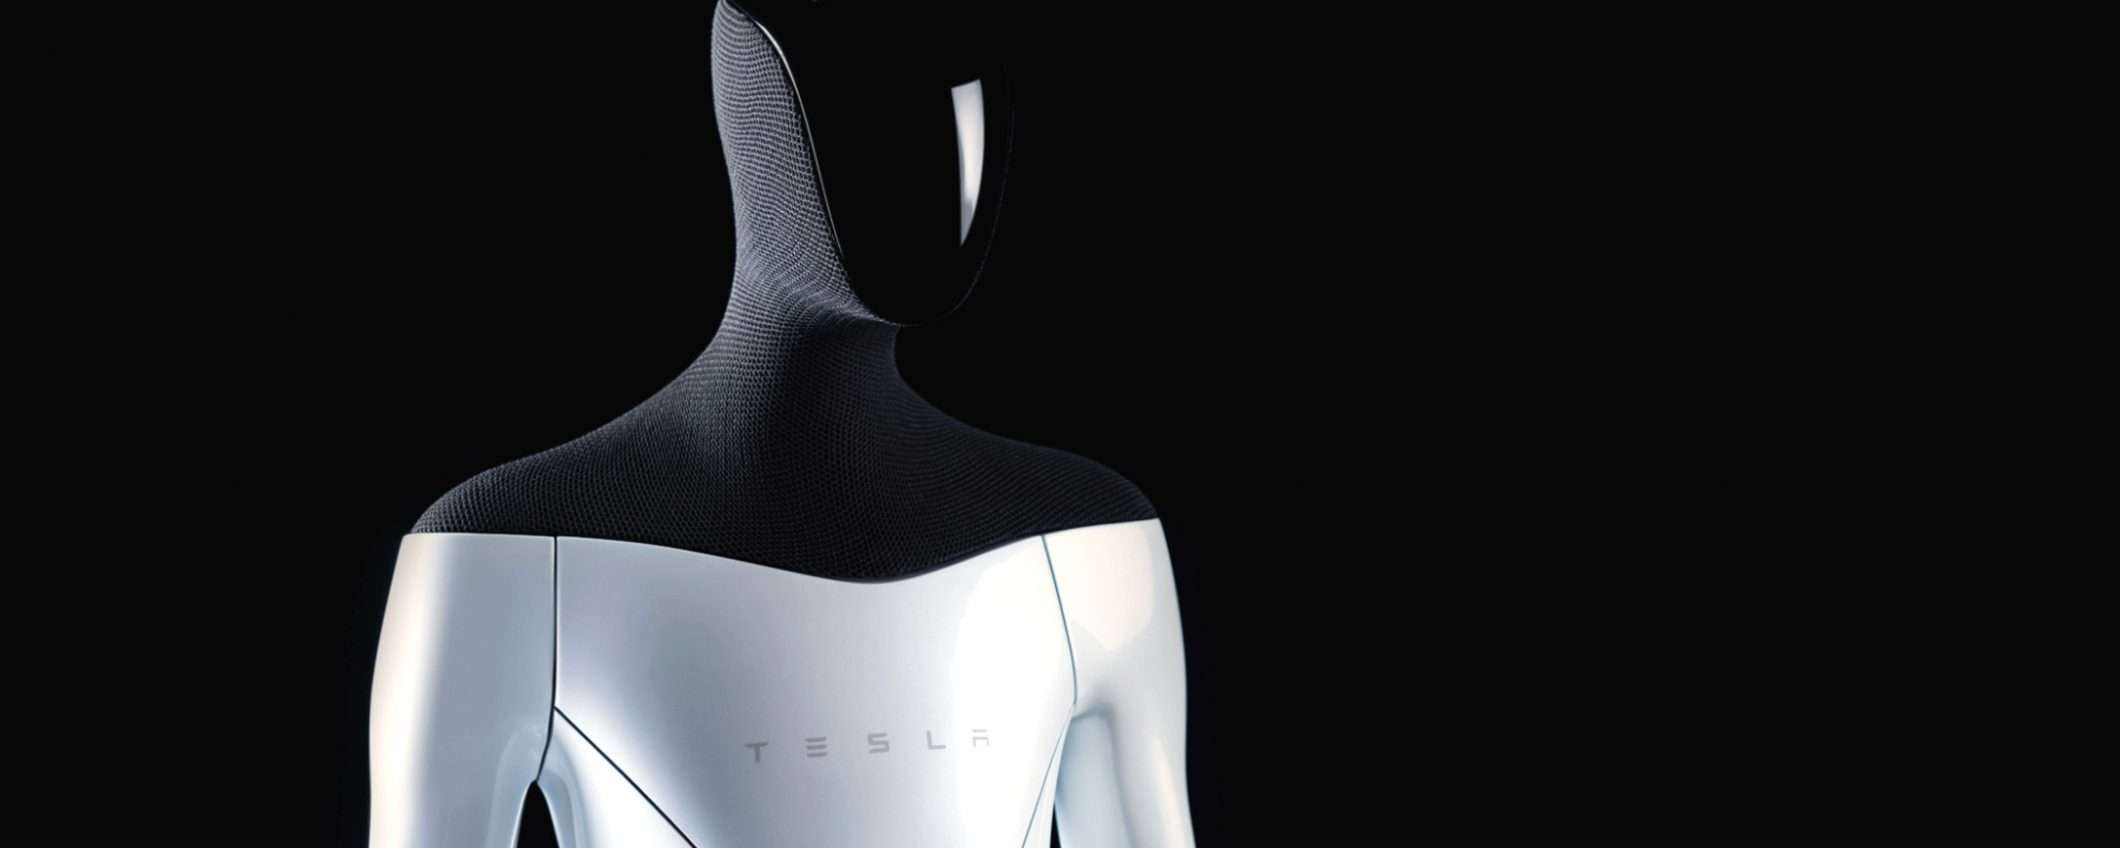 Tesla Bot, il robot umanoide di Elon Musk